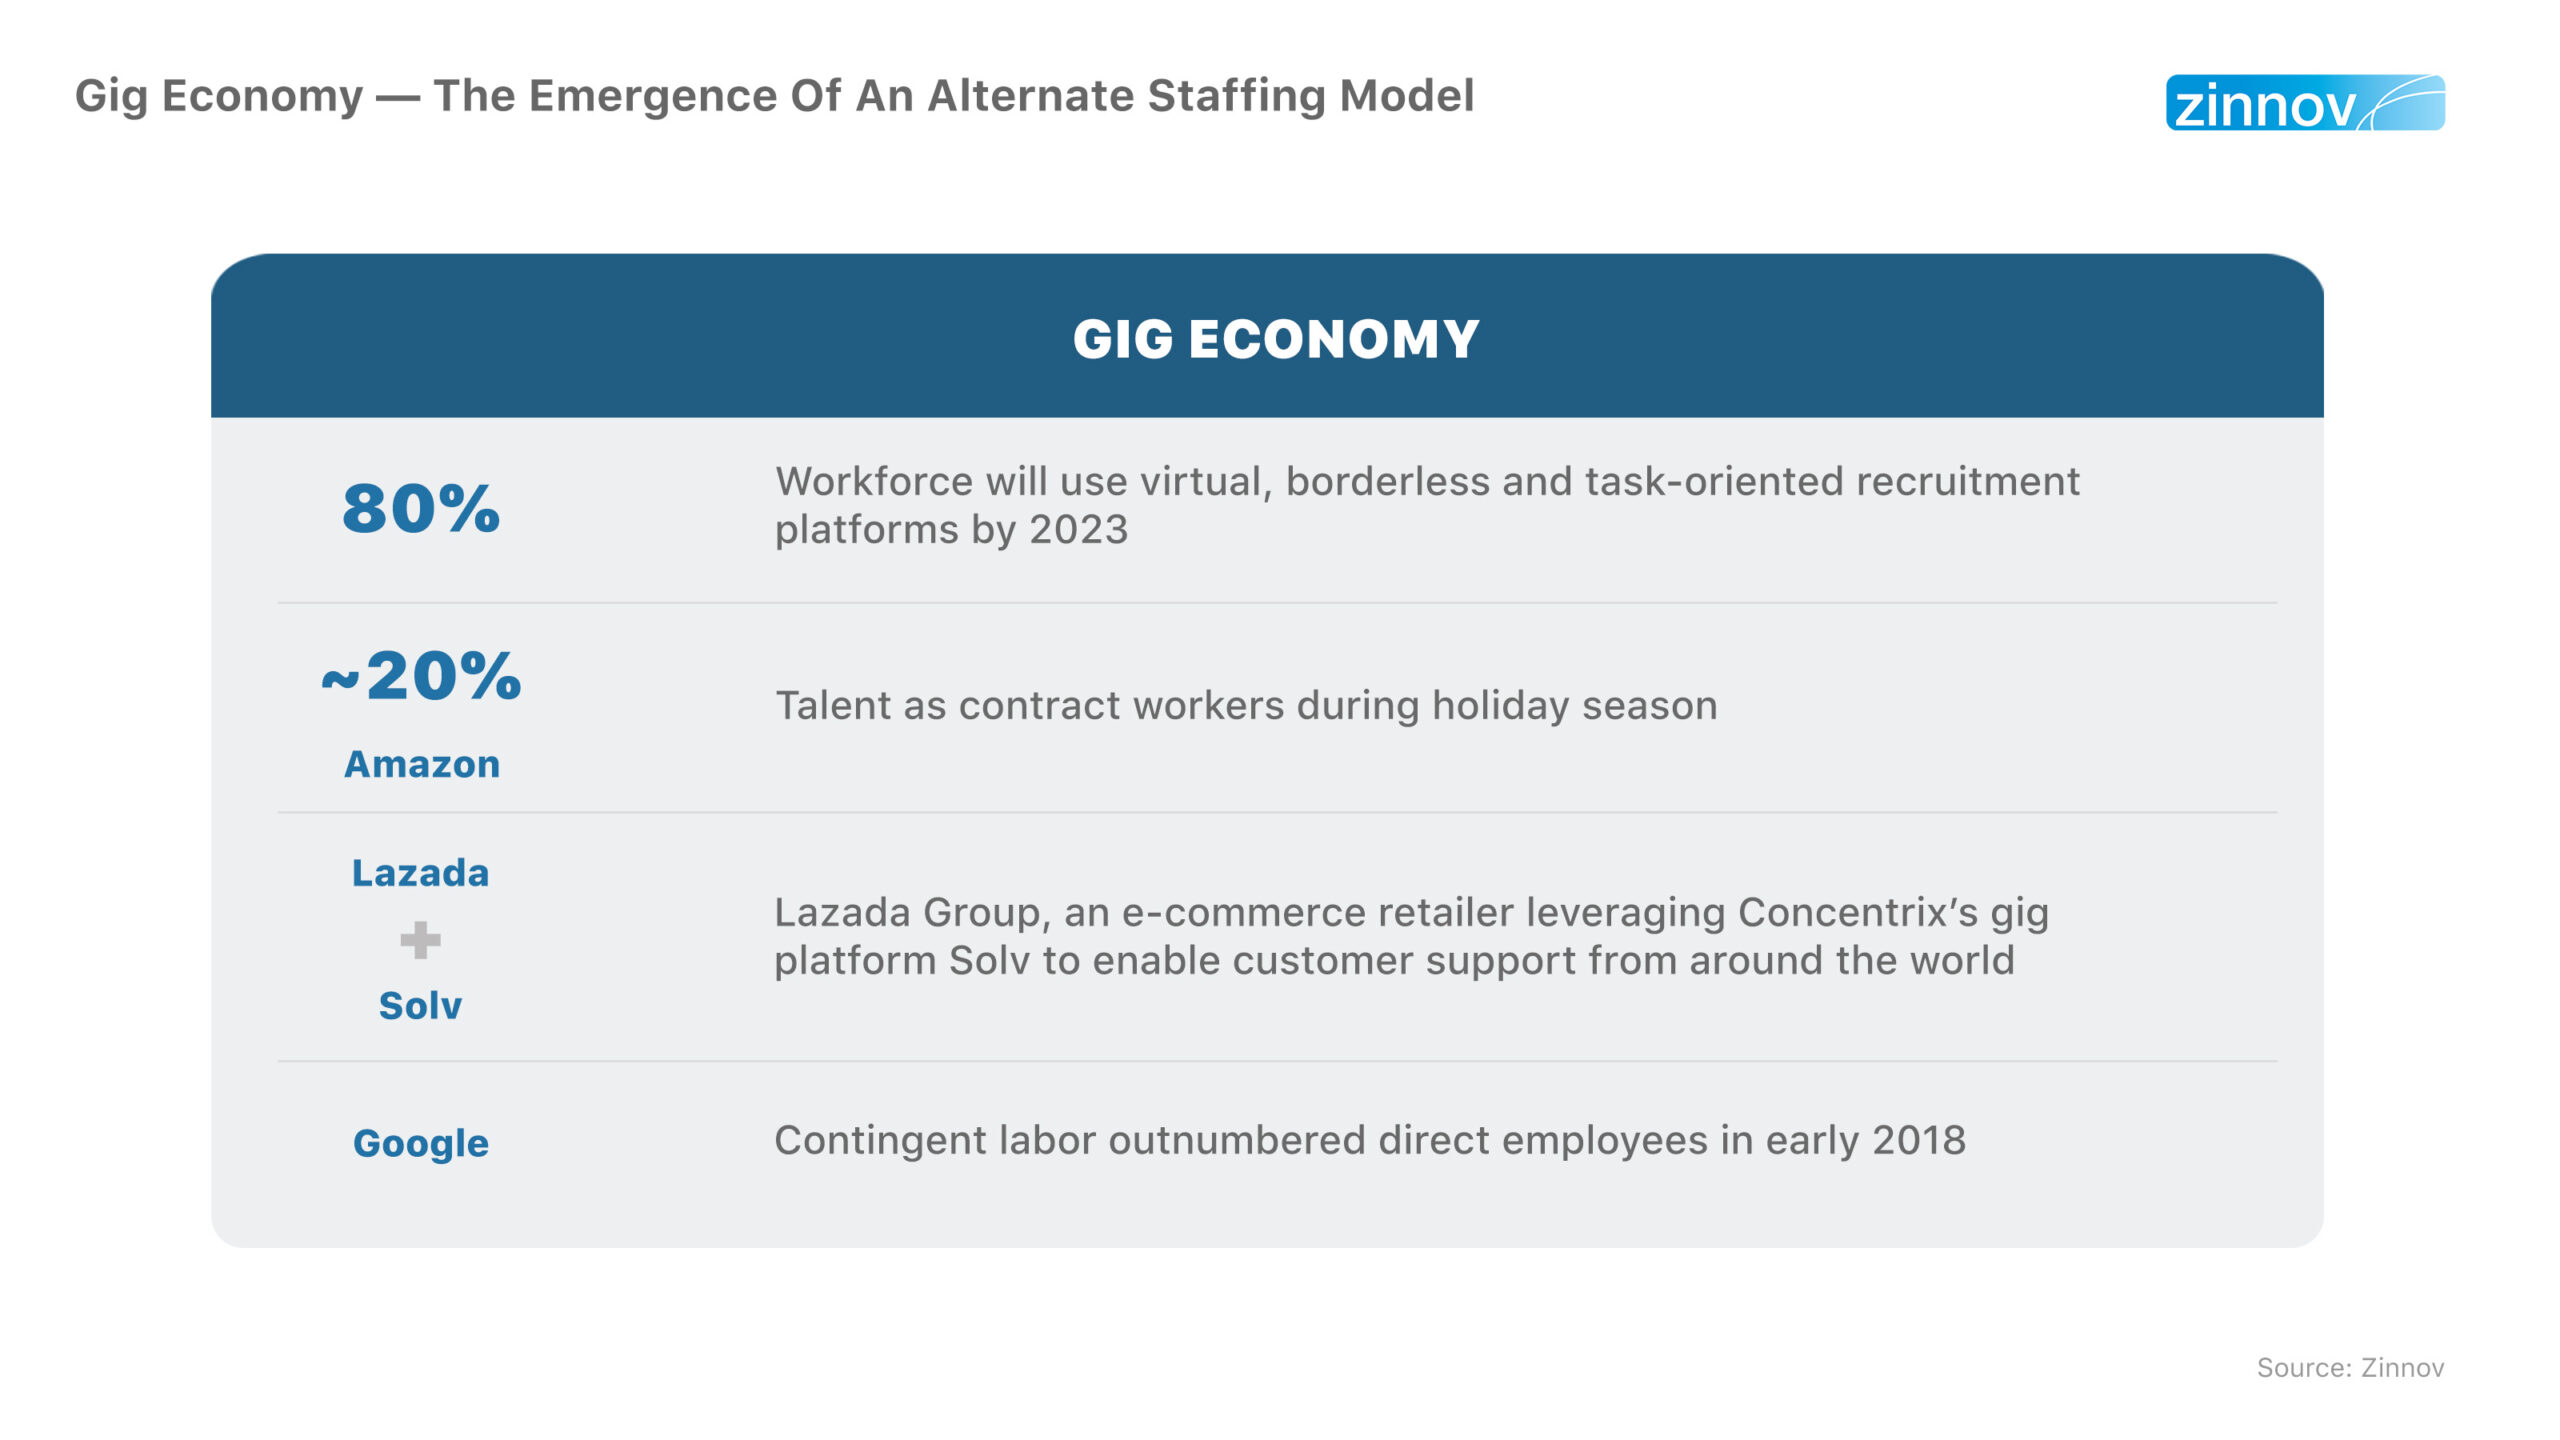 Gig Economy — the emergence of an alternate staffing model